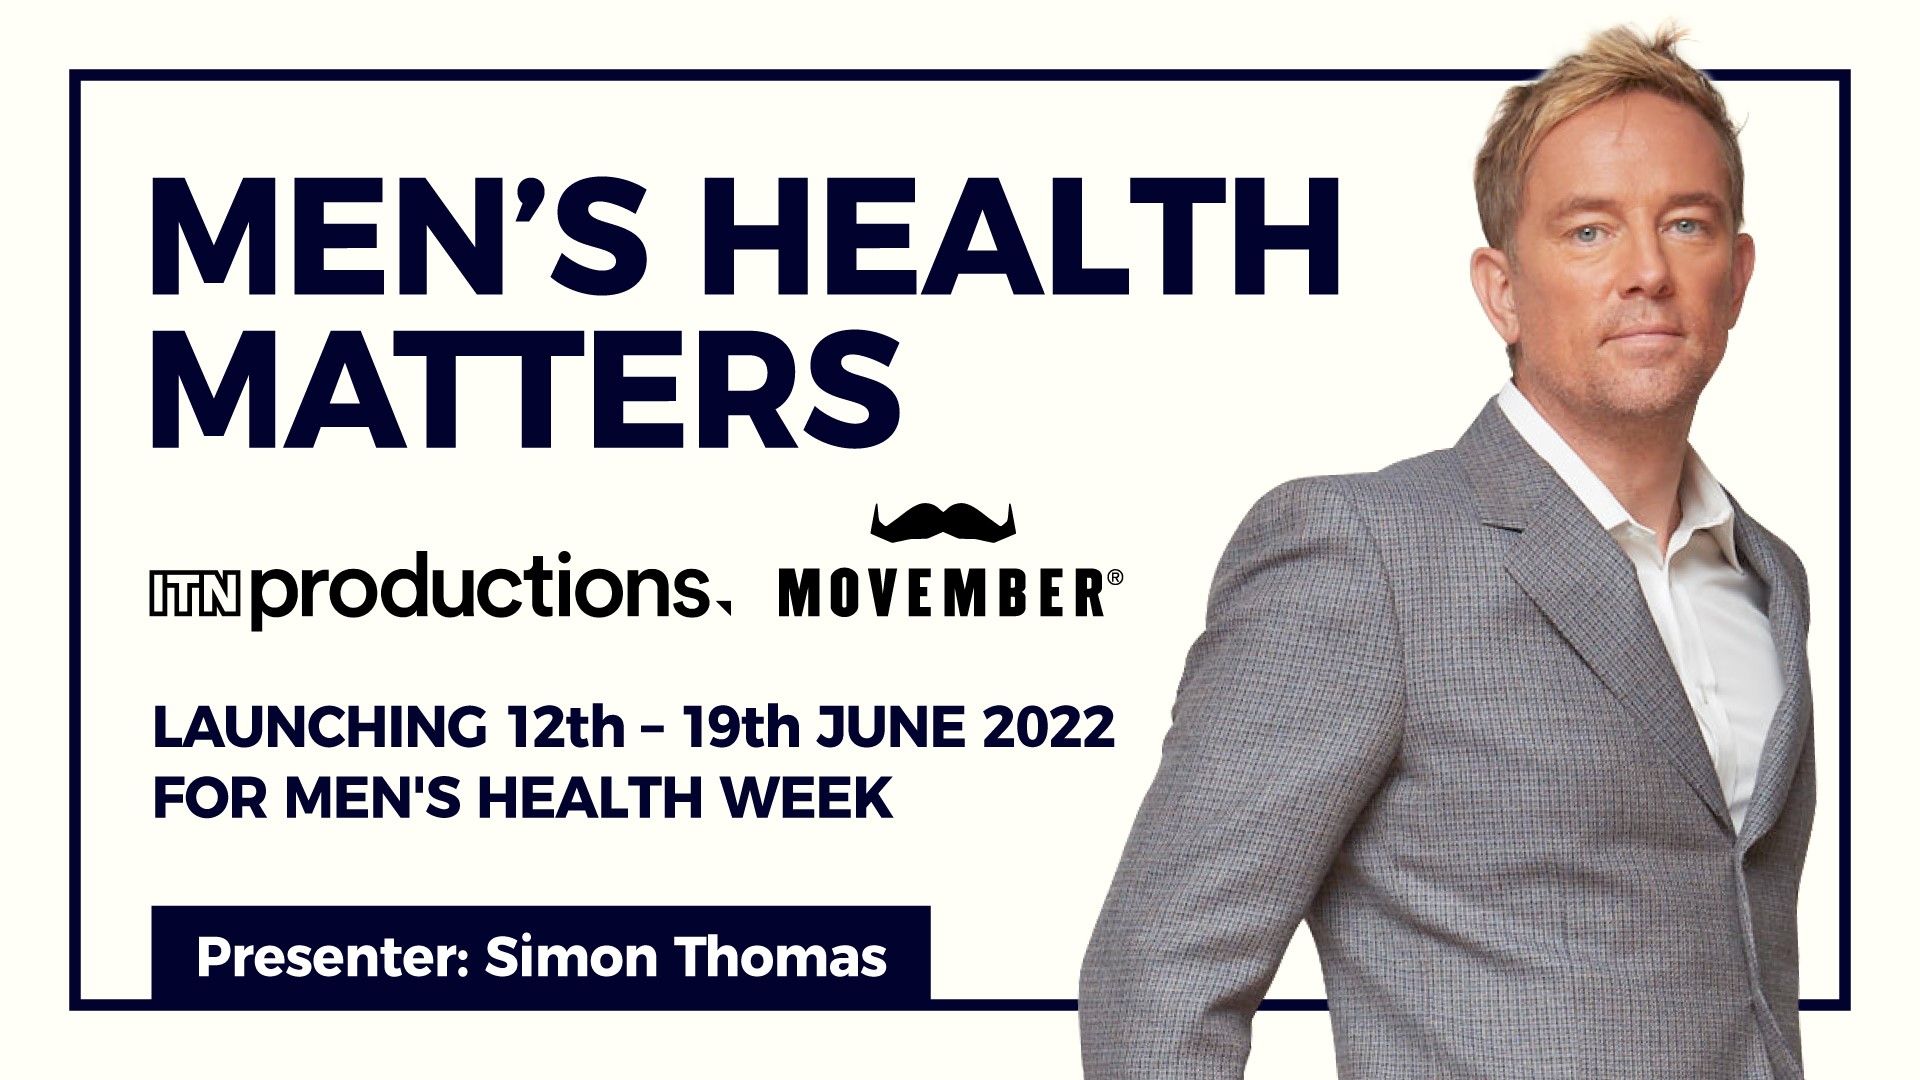 Promo for Men's Health Week programme